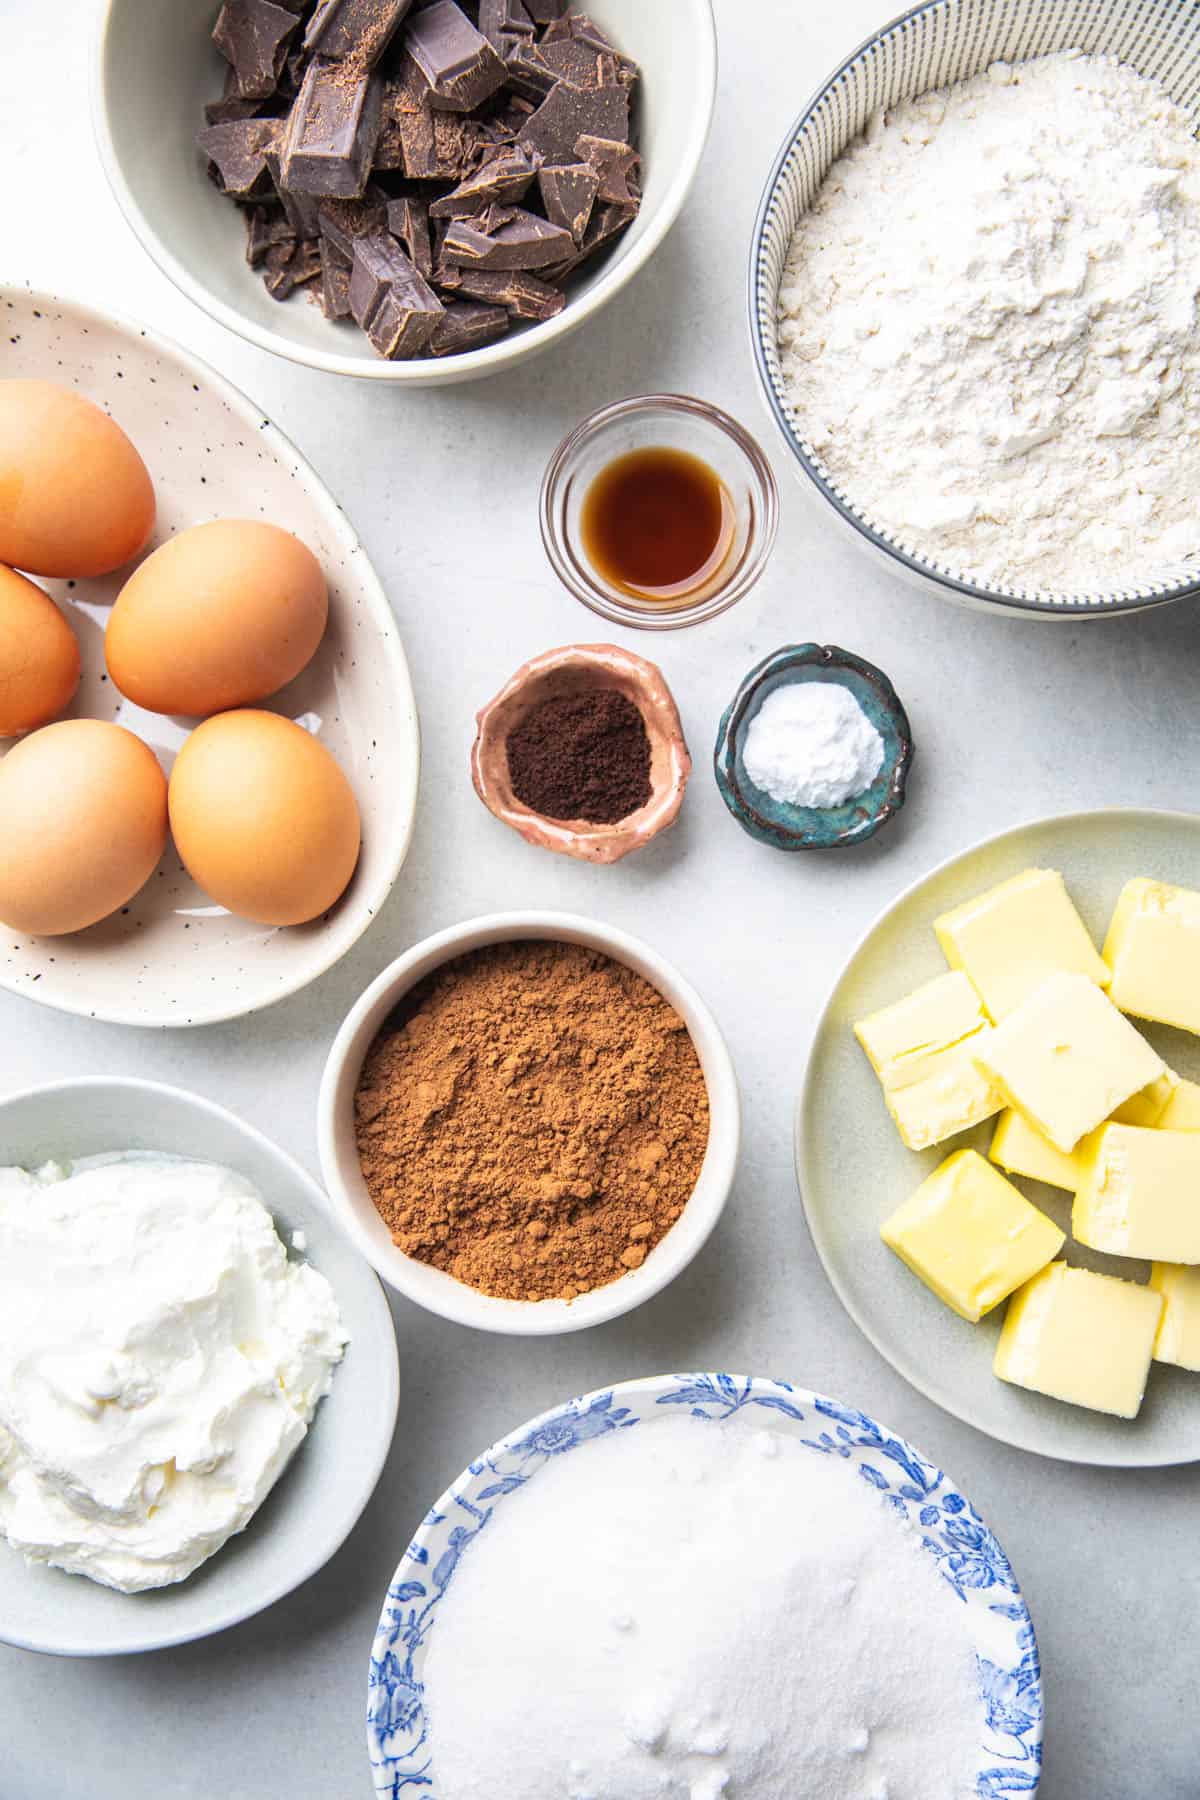 Separate ingredients to make chocolate bundt cake.